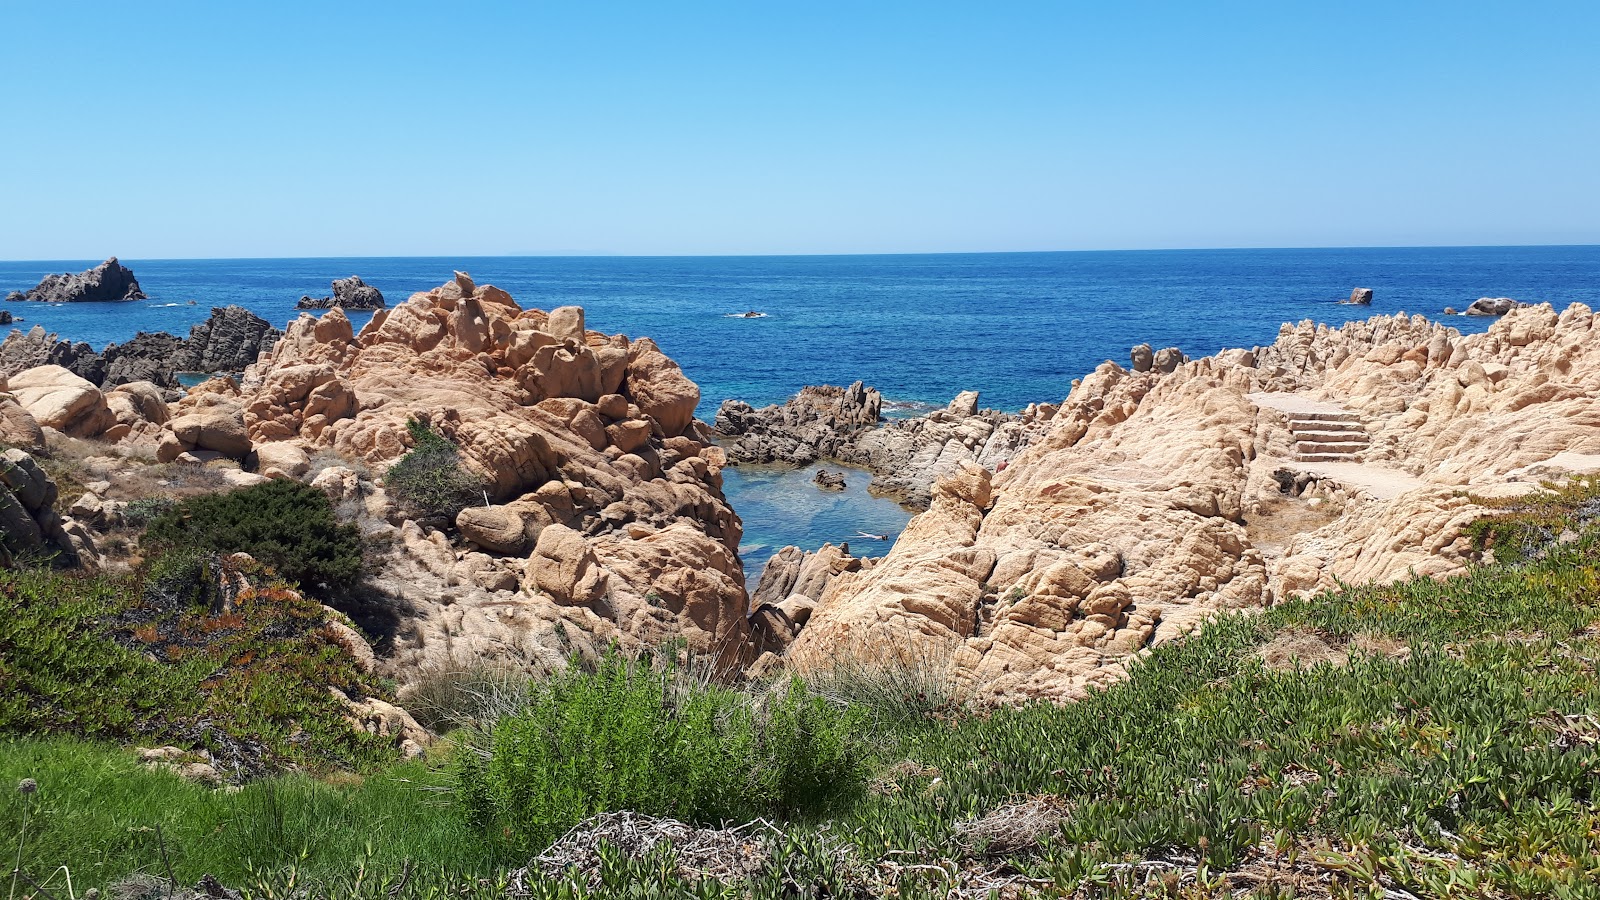 Photo of Spiaggia Li Baietti with rocks cover surface